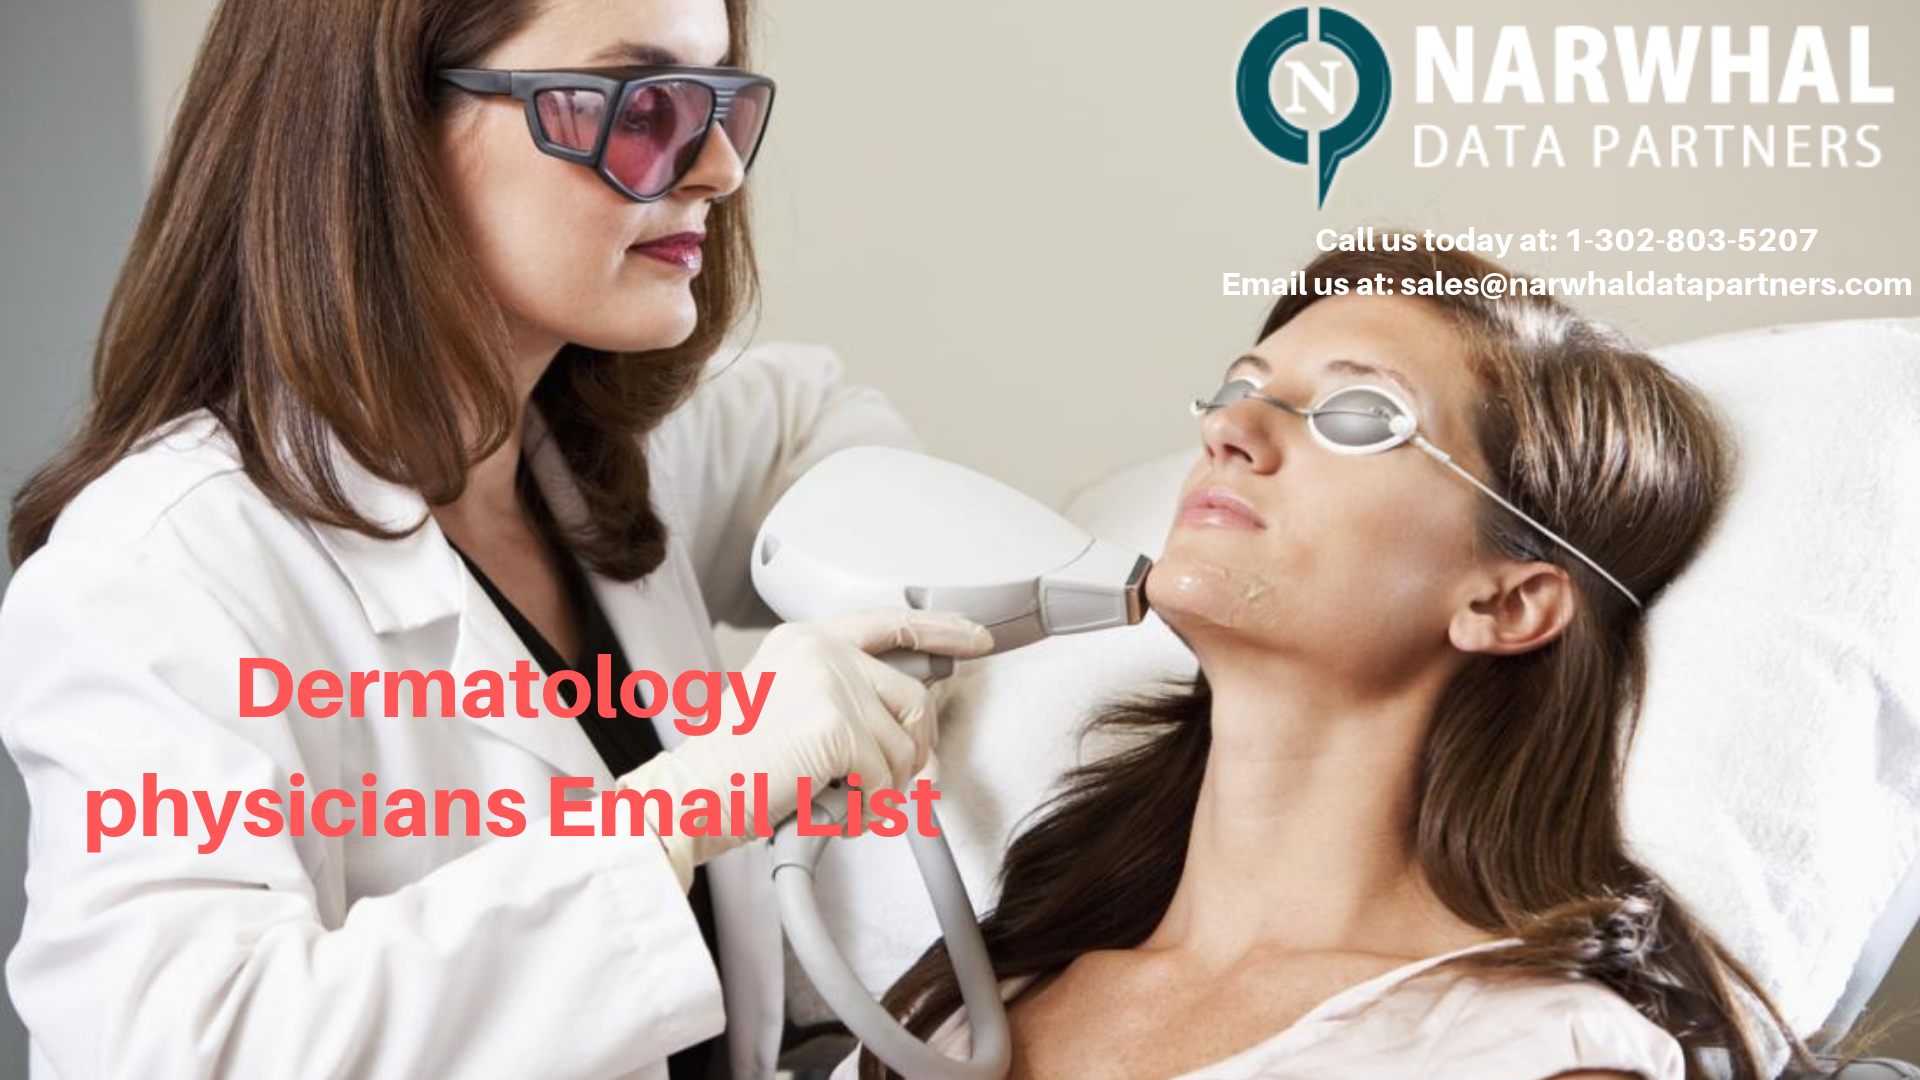 http://narwhaldatapartners.com/dermatology-physicians-email-list.html